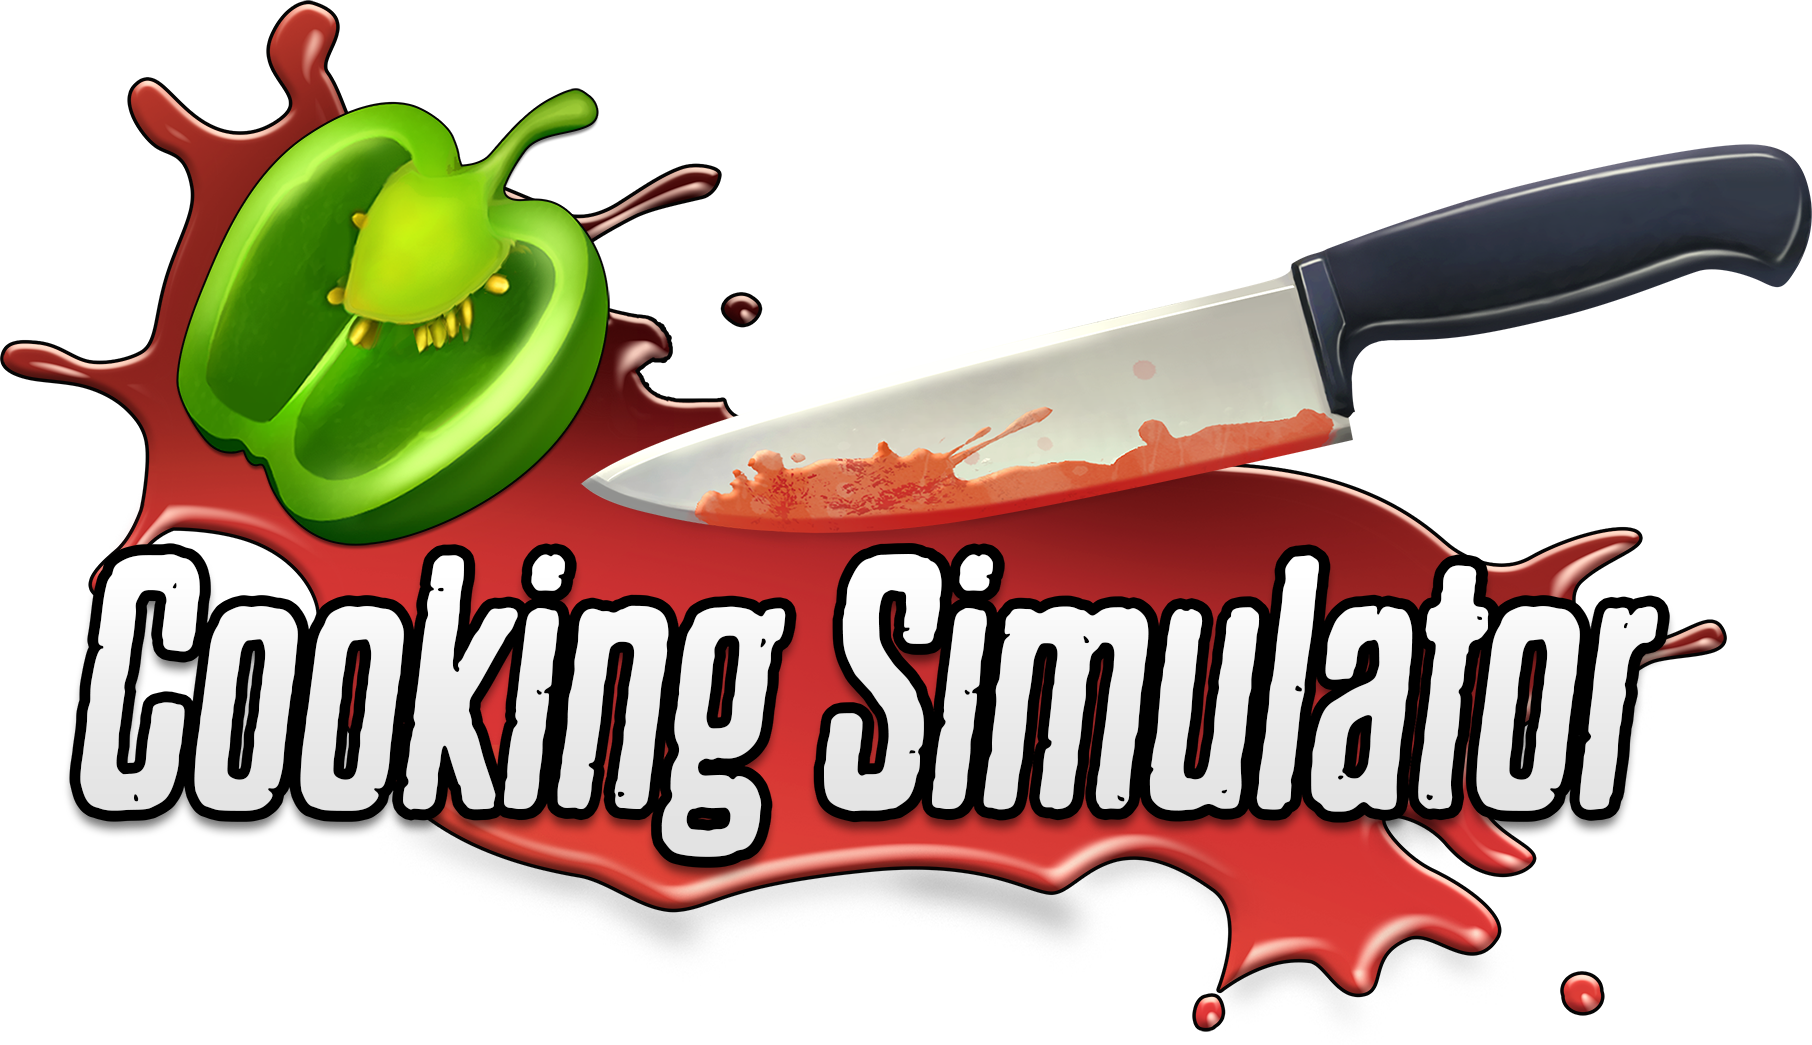 Logo for Cooking Simulator